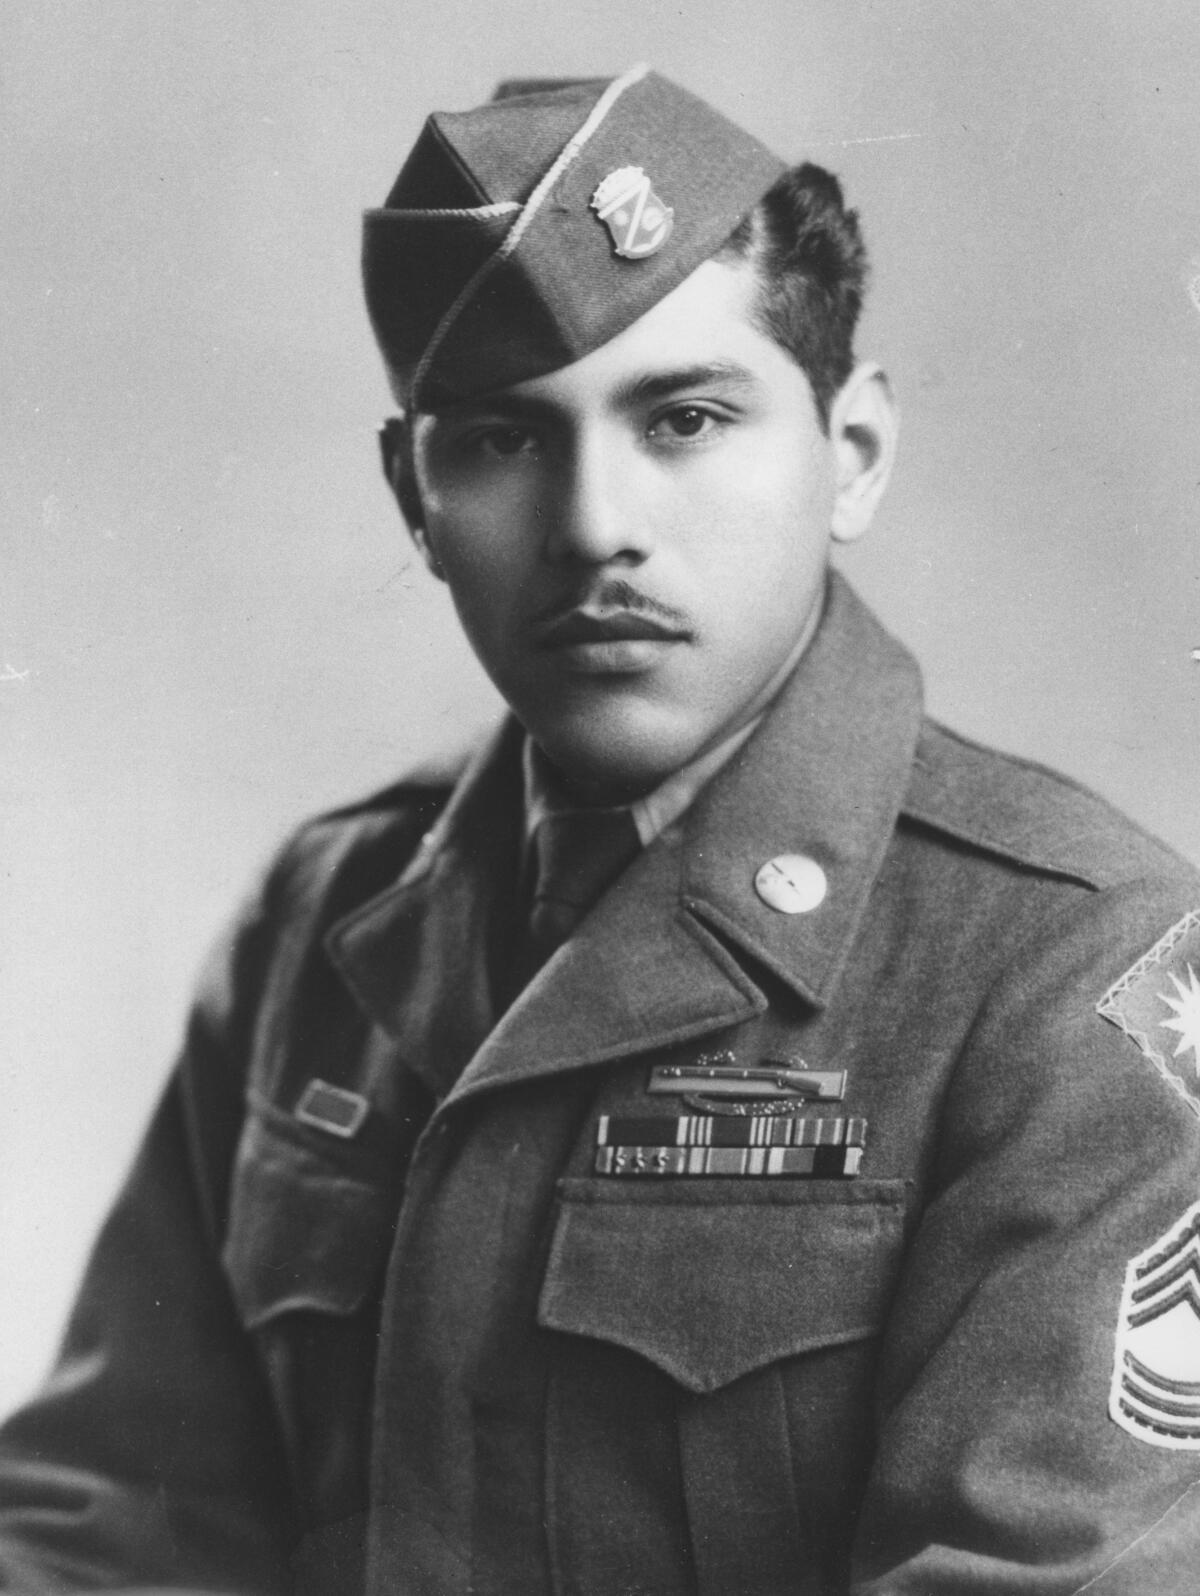 Rudy Estrada Jr. during the Korean War